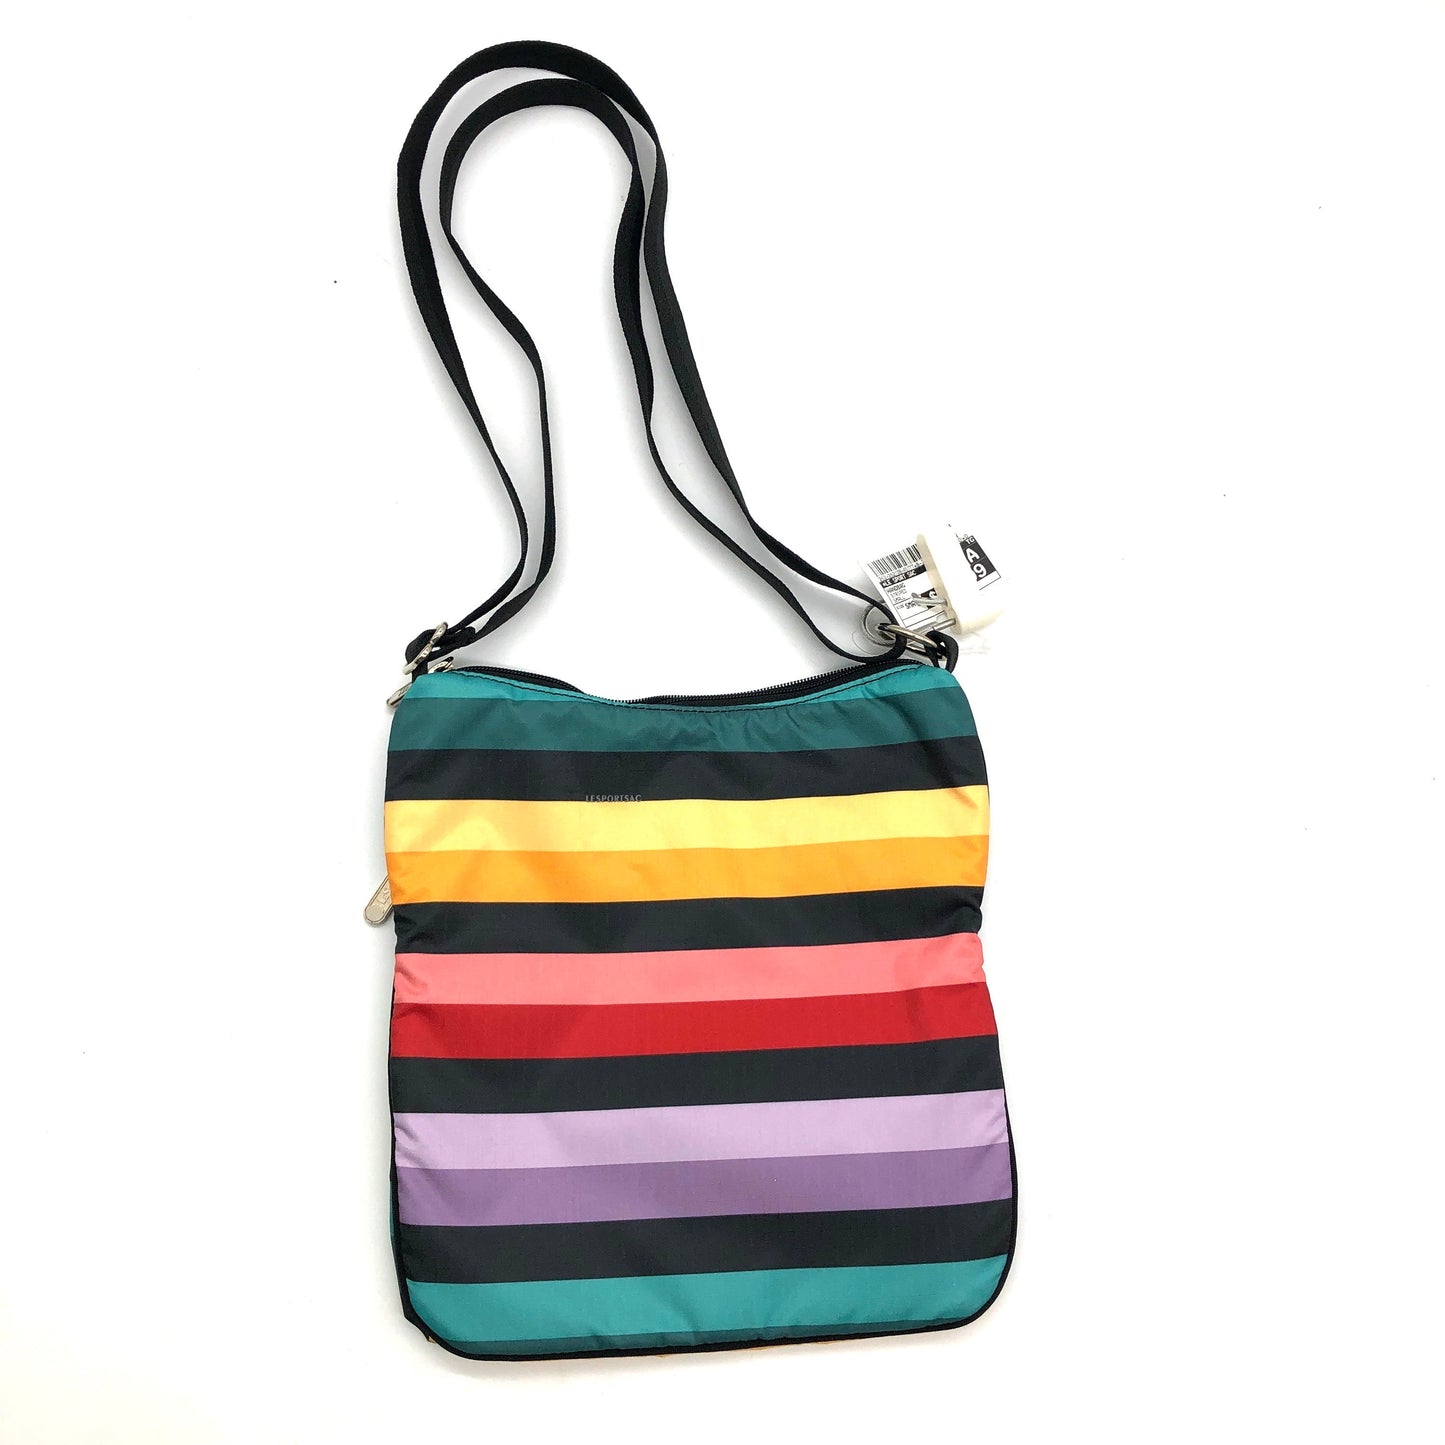 Handbag By Le Sport Sac  Size: Small